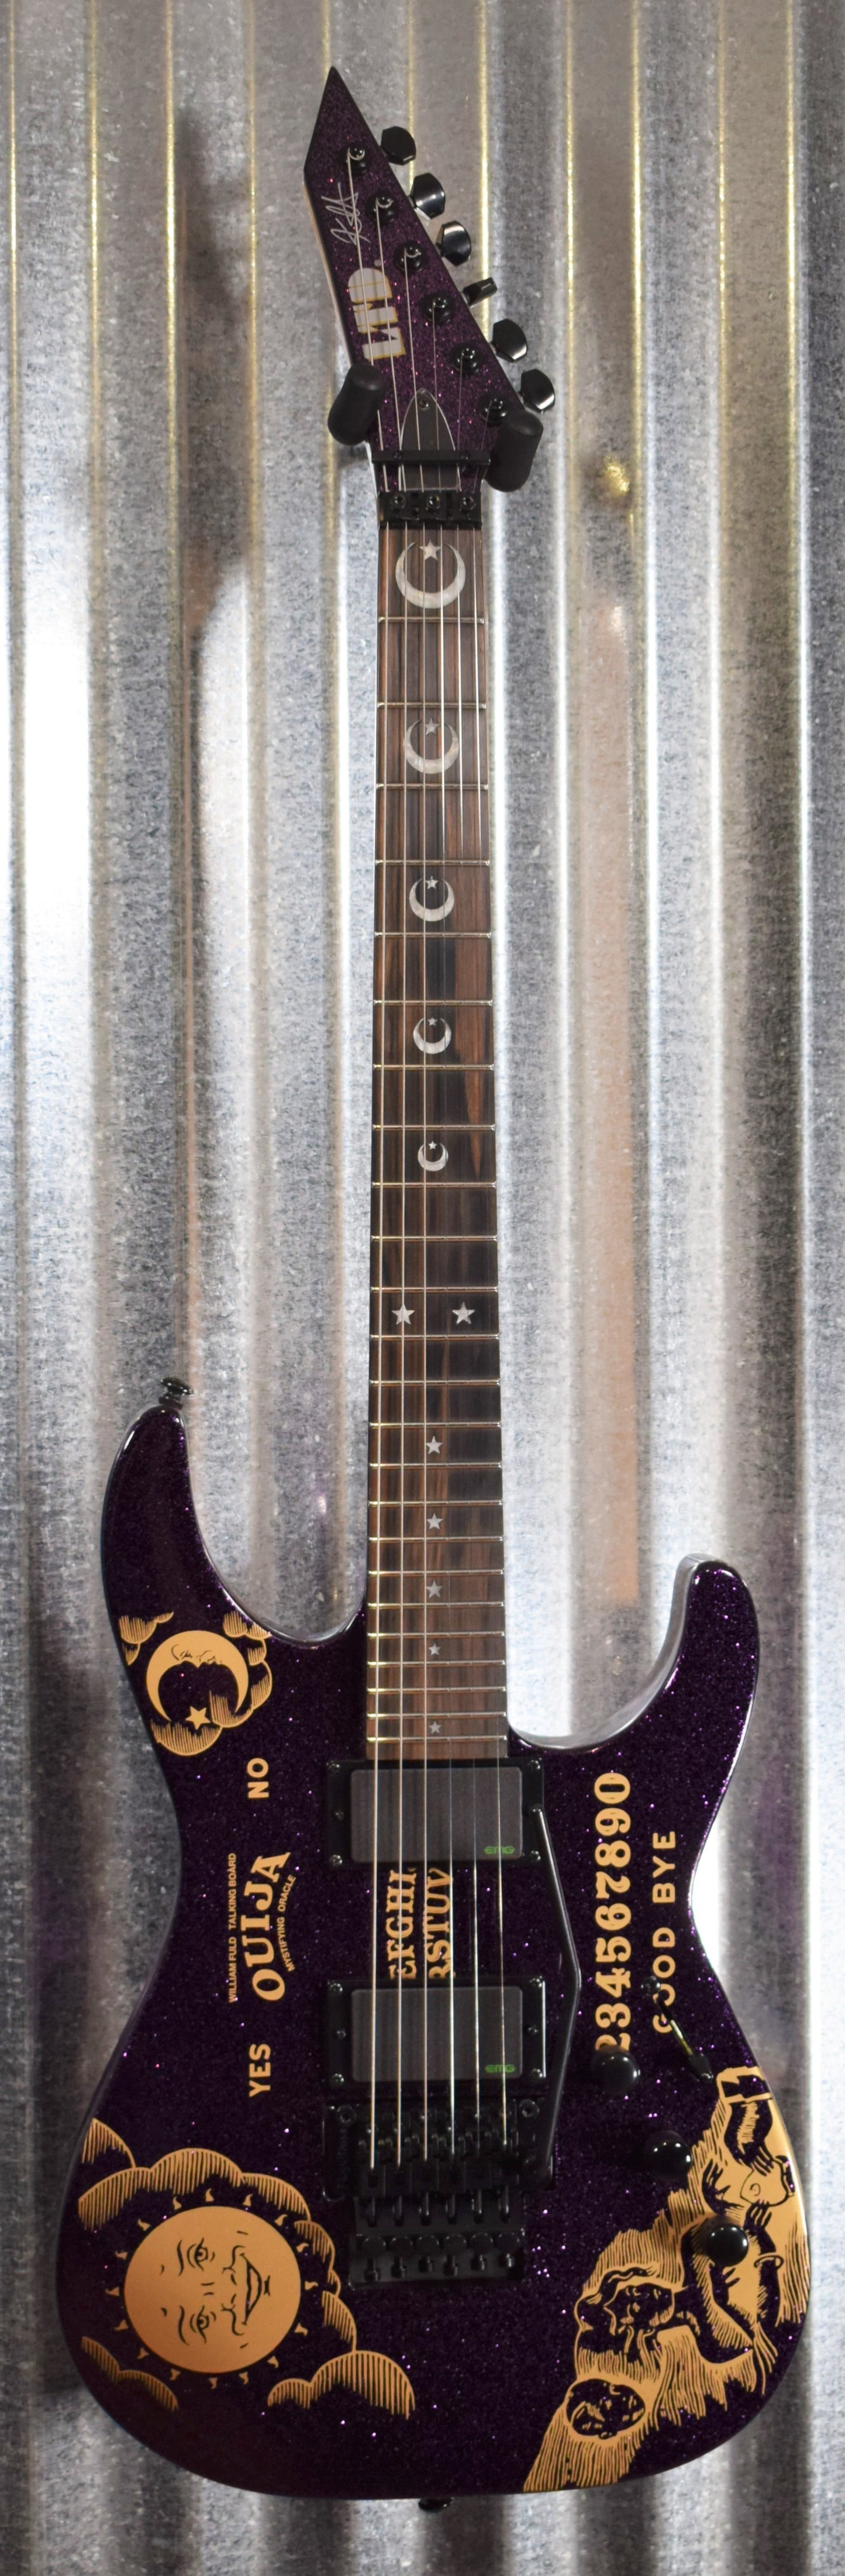 ESP LTD Kirk Hammett Sparkle Ouija Purple EMG Limited Edition Guitar & Case #149